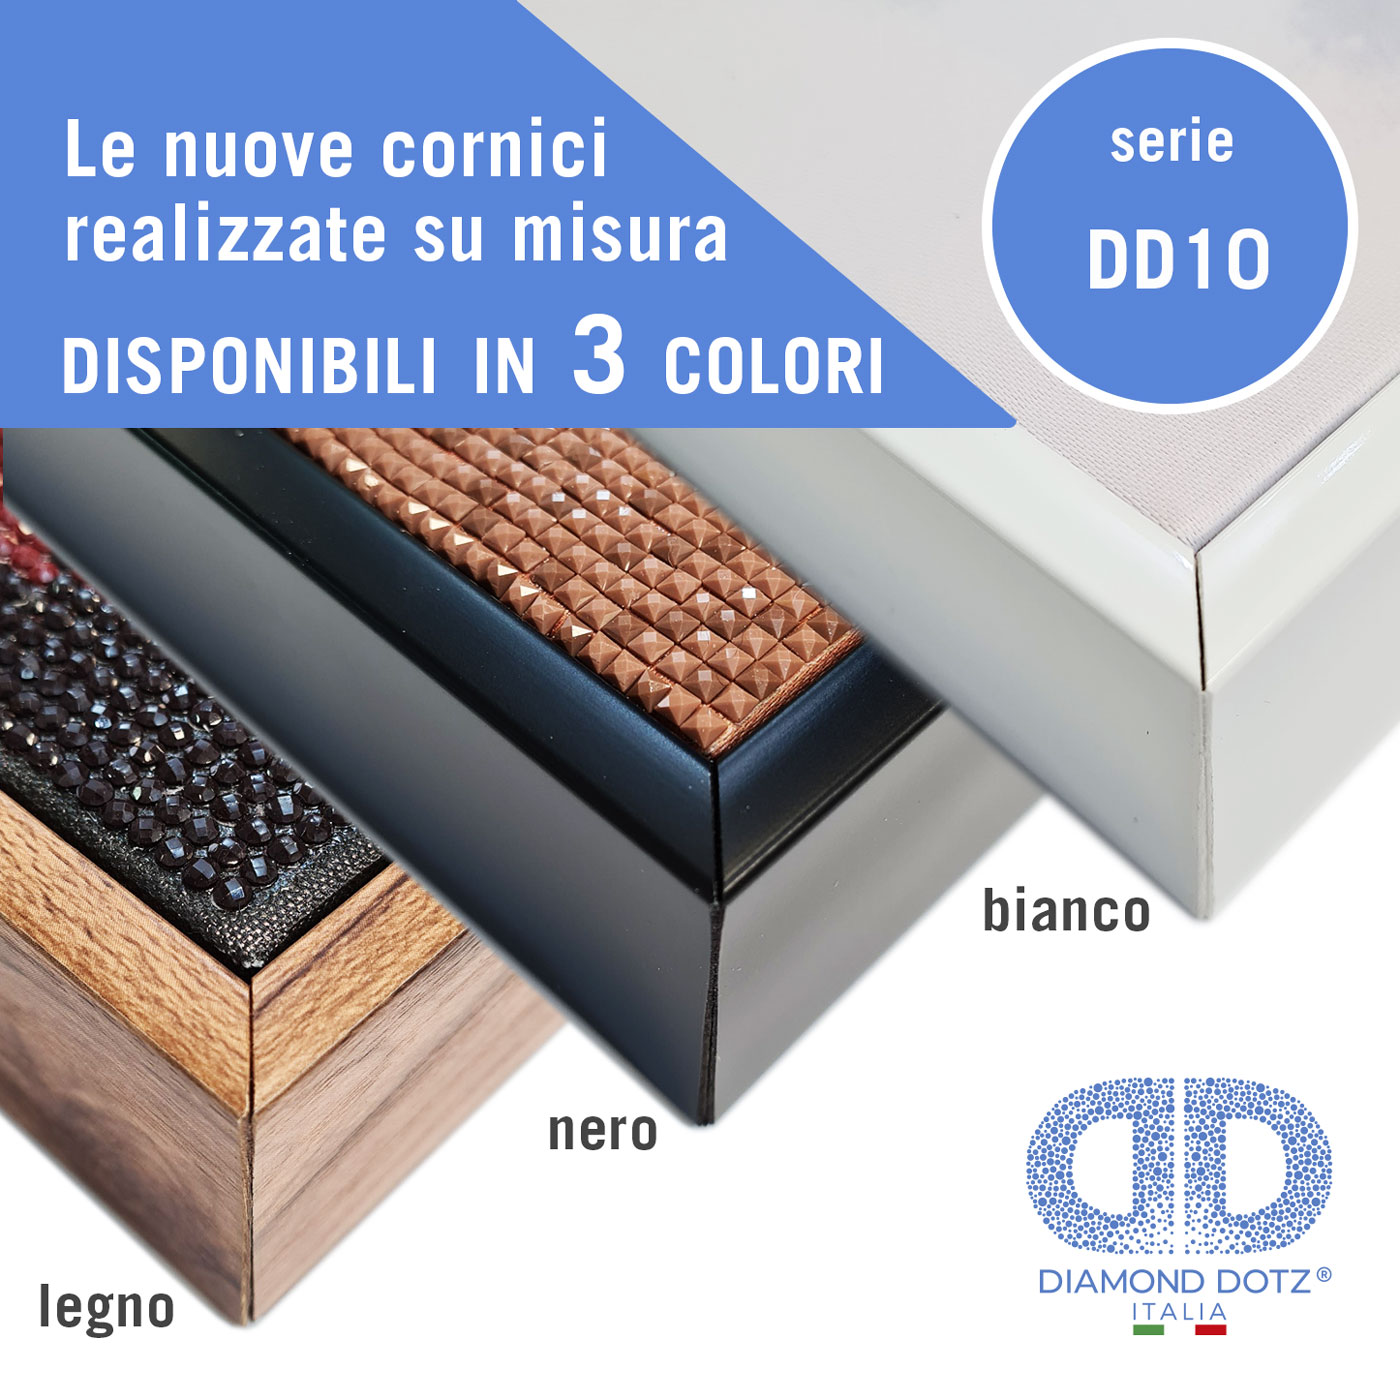 Cornice Serie DD10 - Diamond Dotz Italia